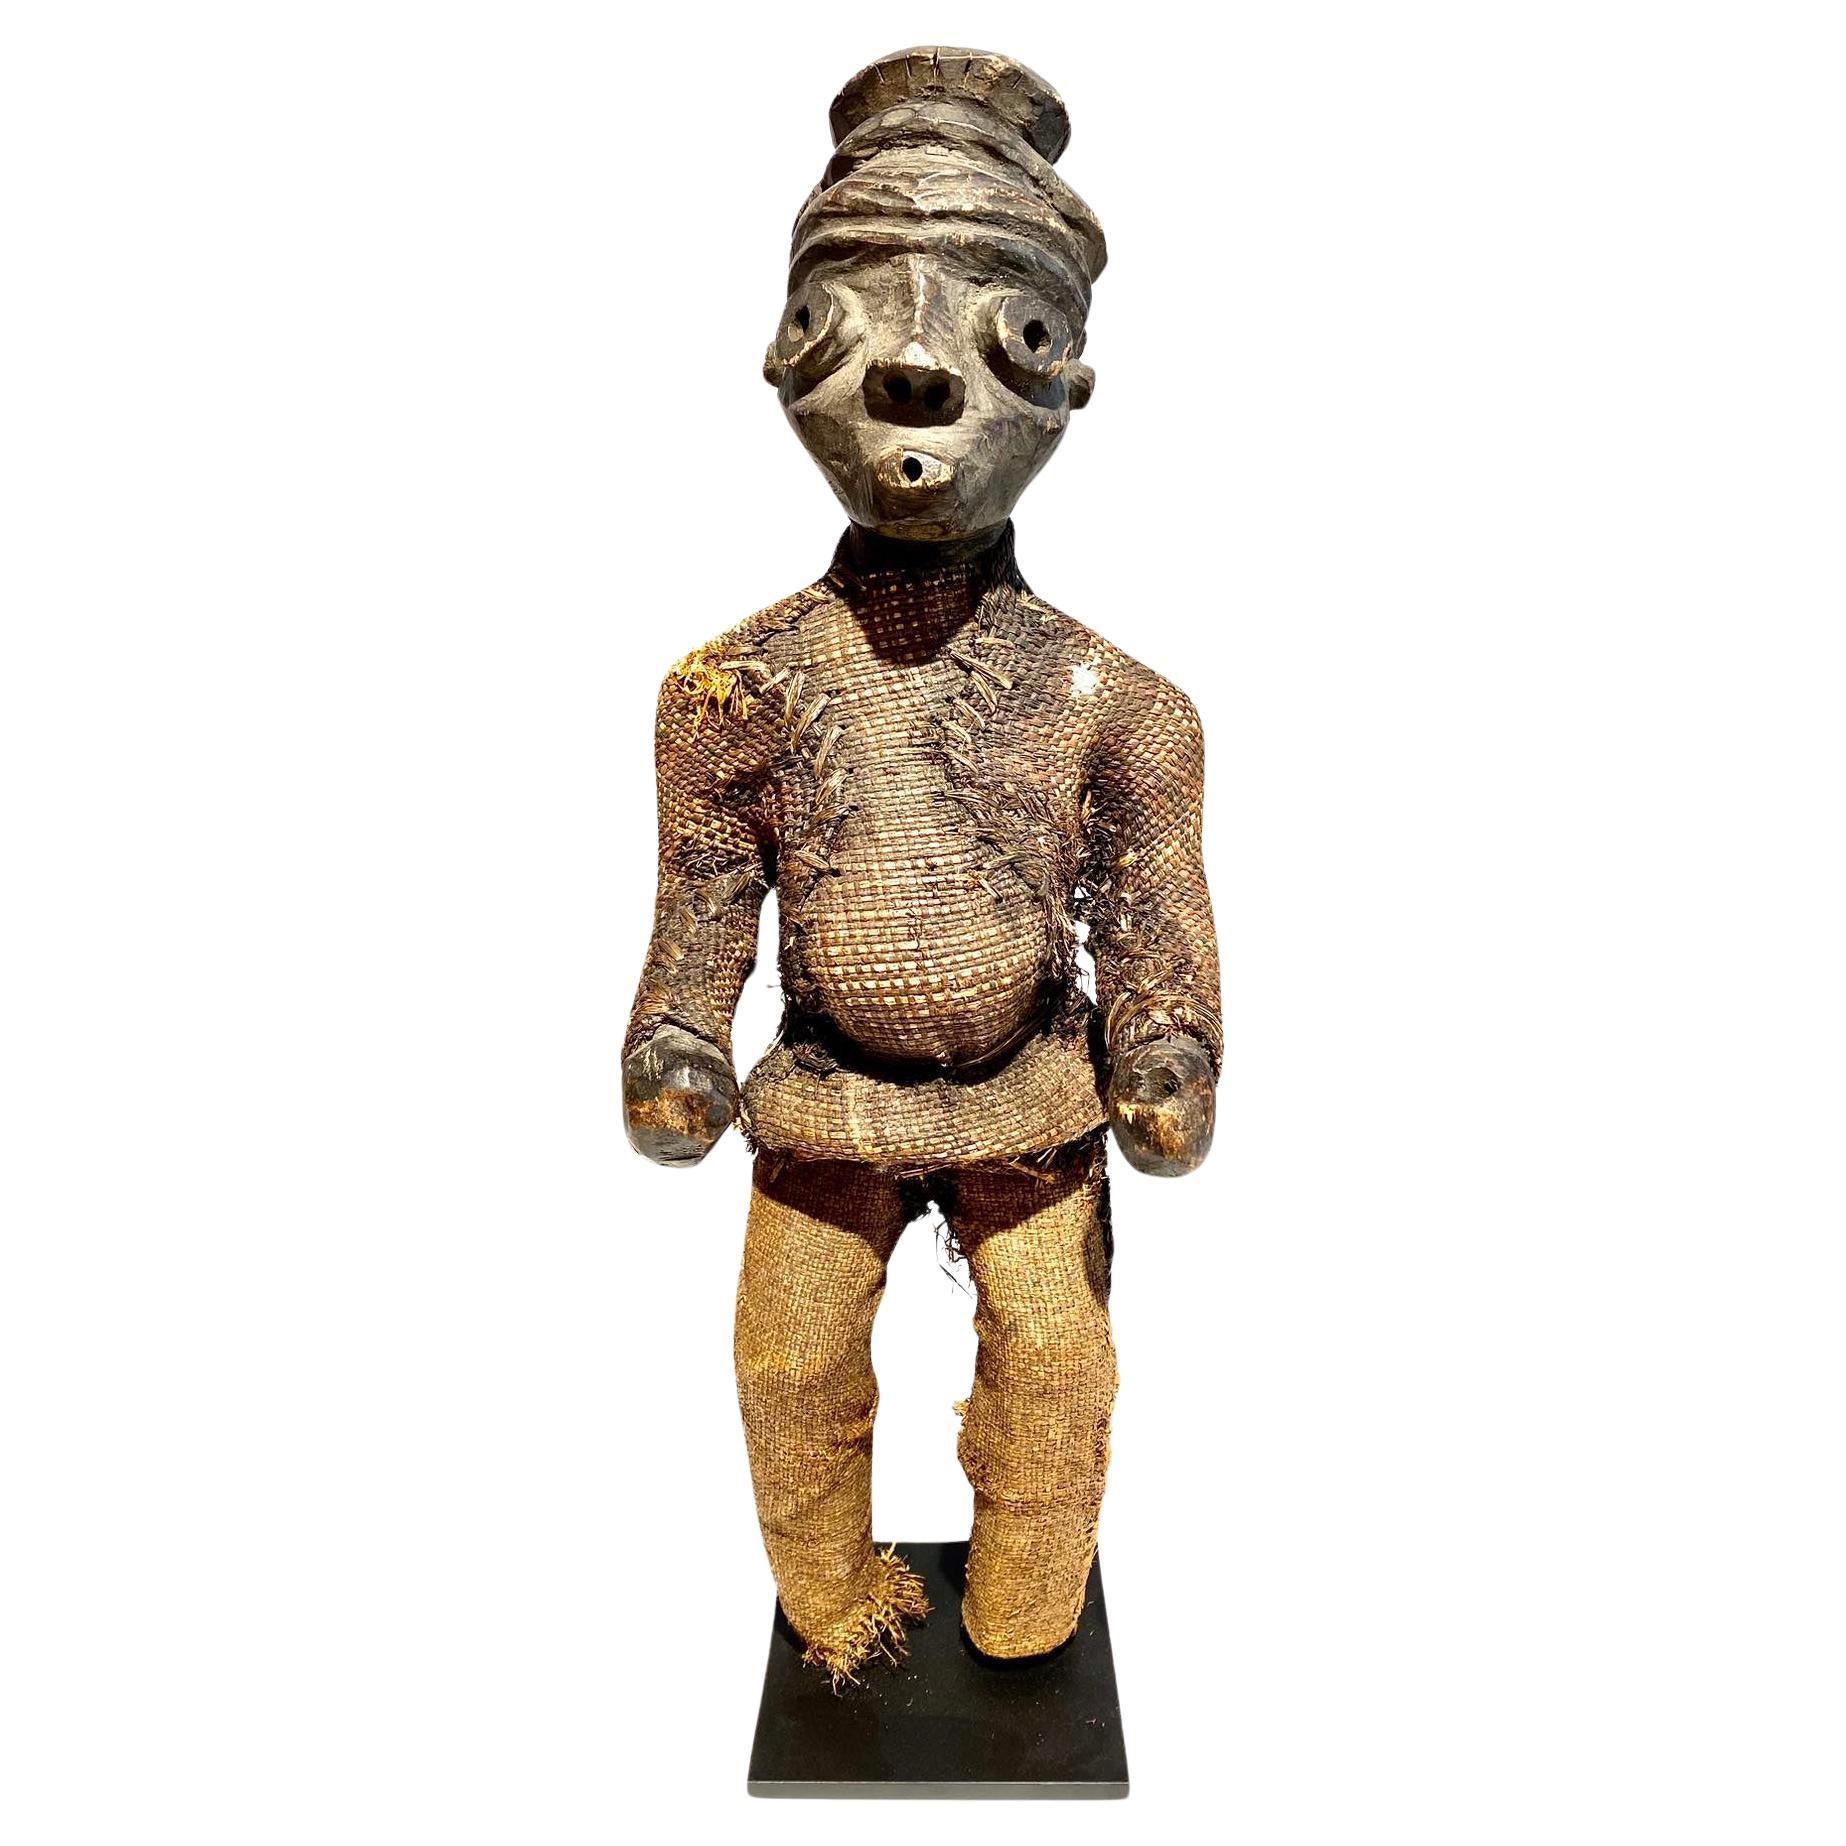 Wooden Pende Antropomorphic Statue Congo Region Kasaï -19th century African Art For Sale